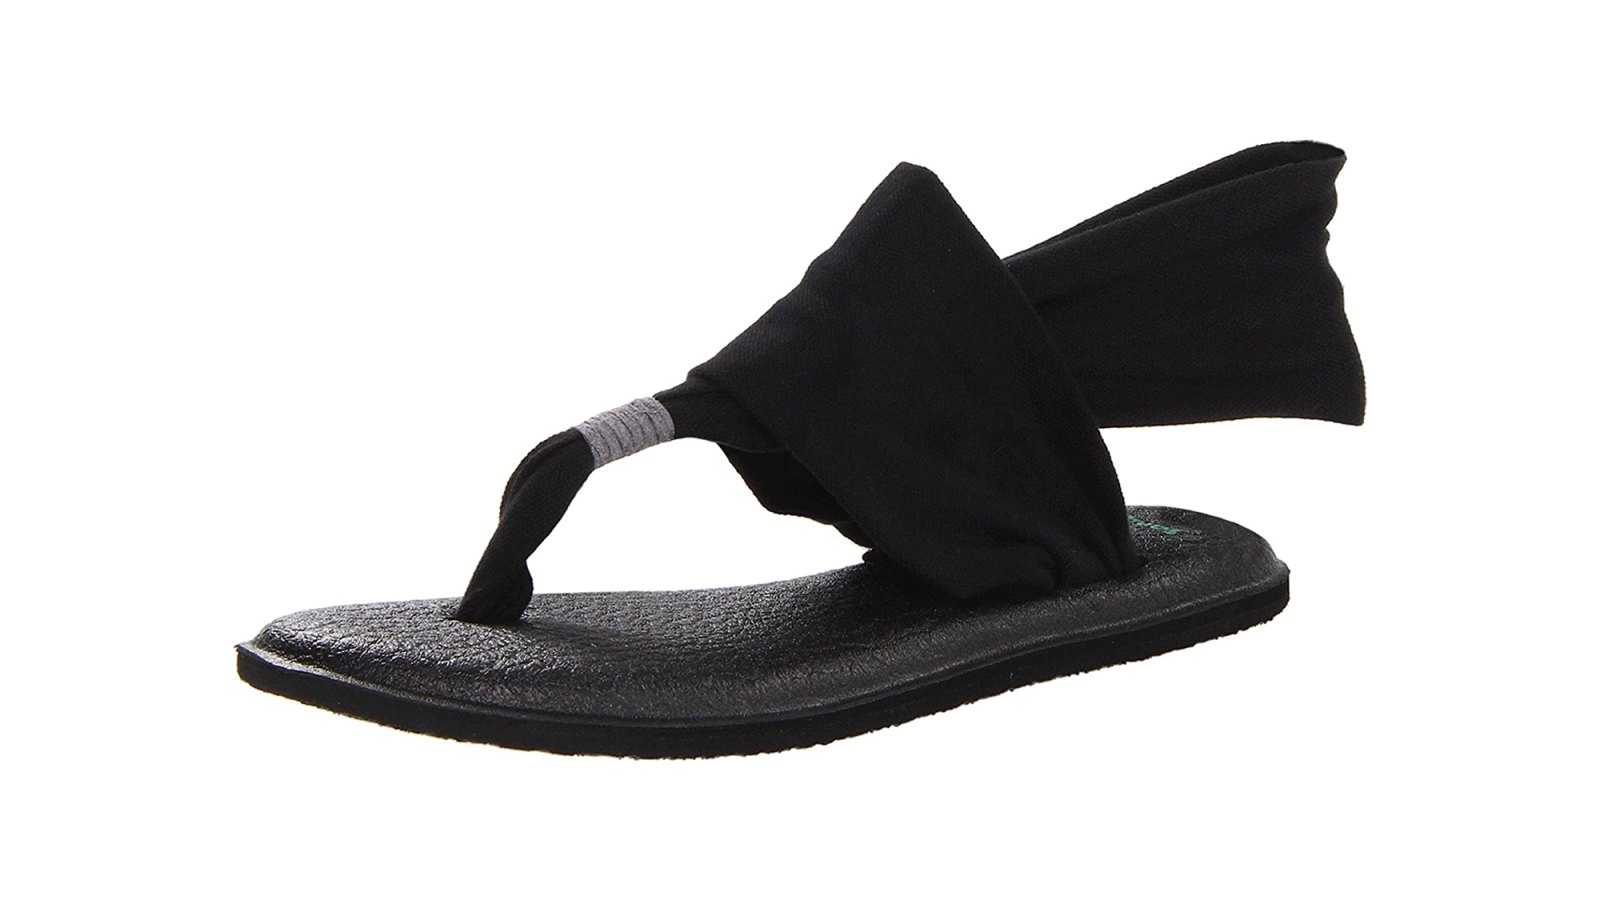 Sanuk Yoga Mat Shoes 8 Distributor South Africa - Sanuk For Sale Cape Town